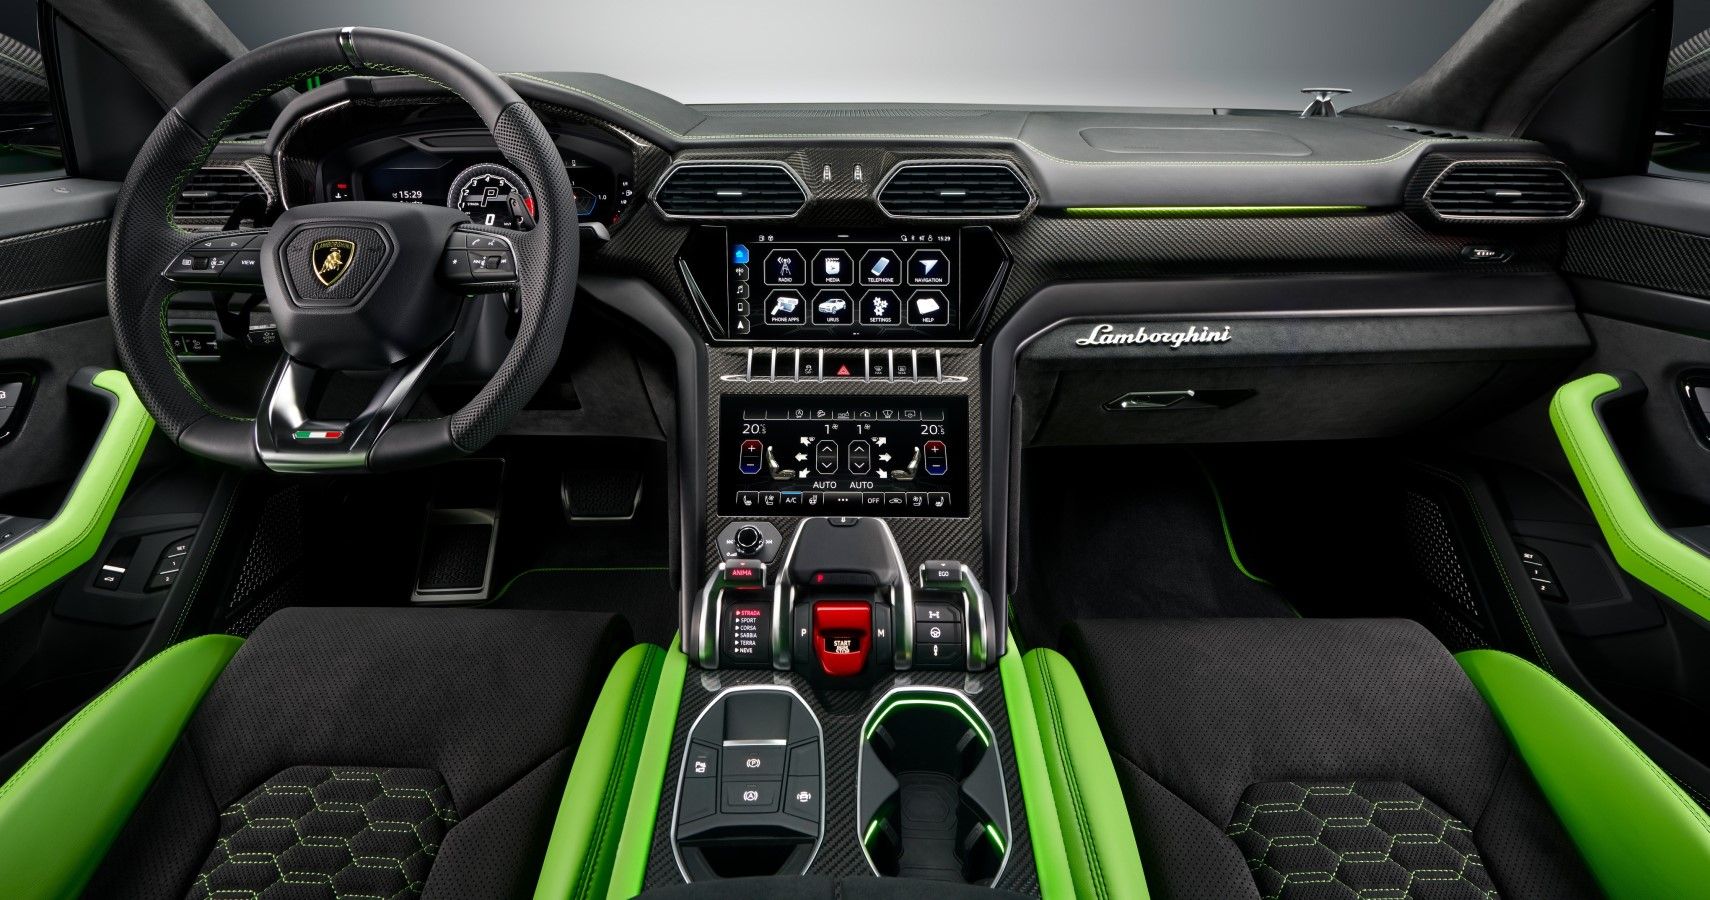 Lamborghini Urus interior dashboard layout view